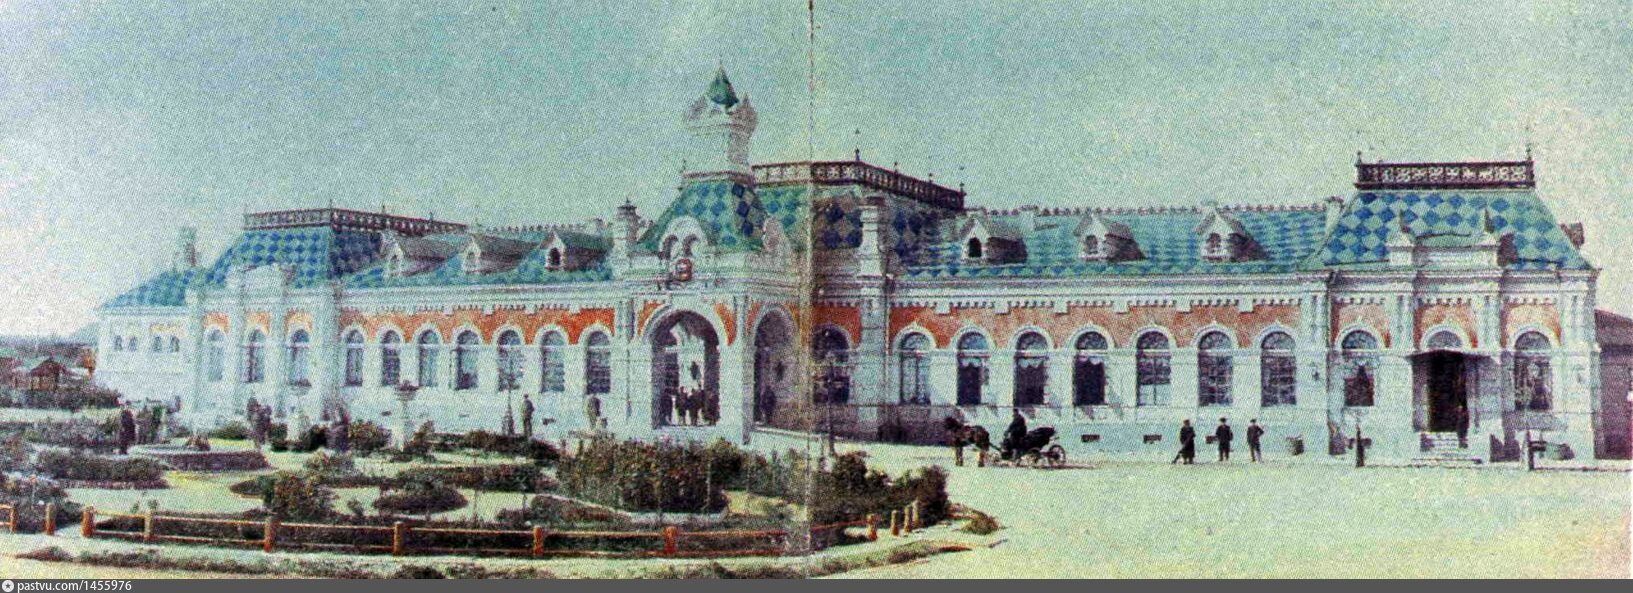 старый железнодорожный вокзал екатеринбург